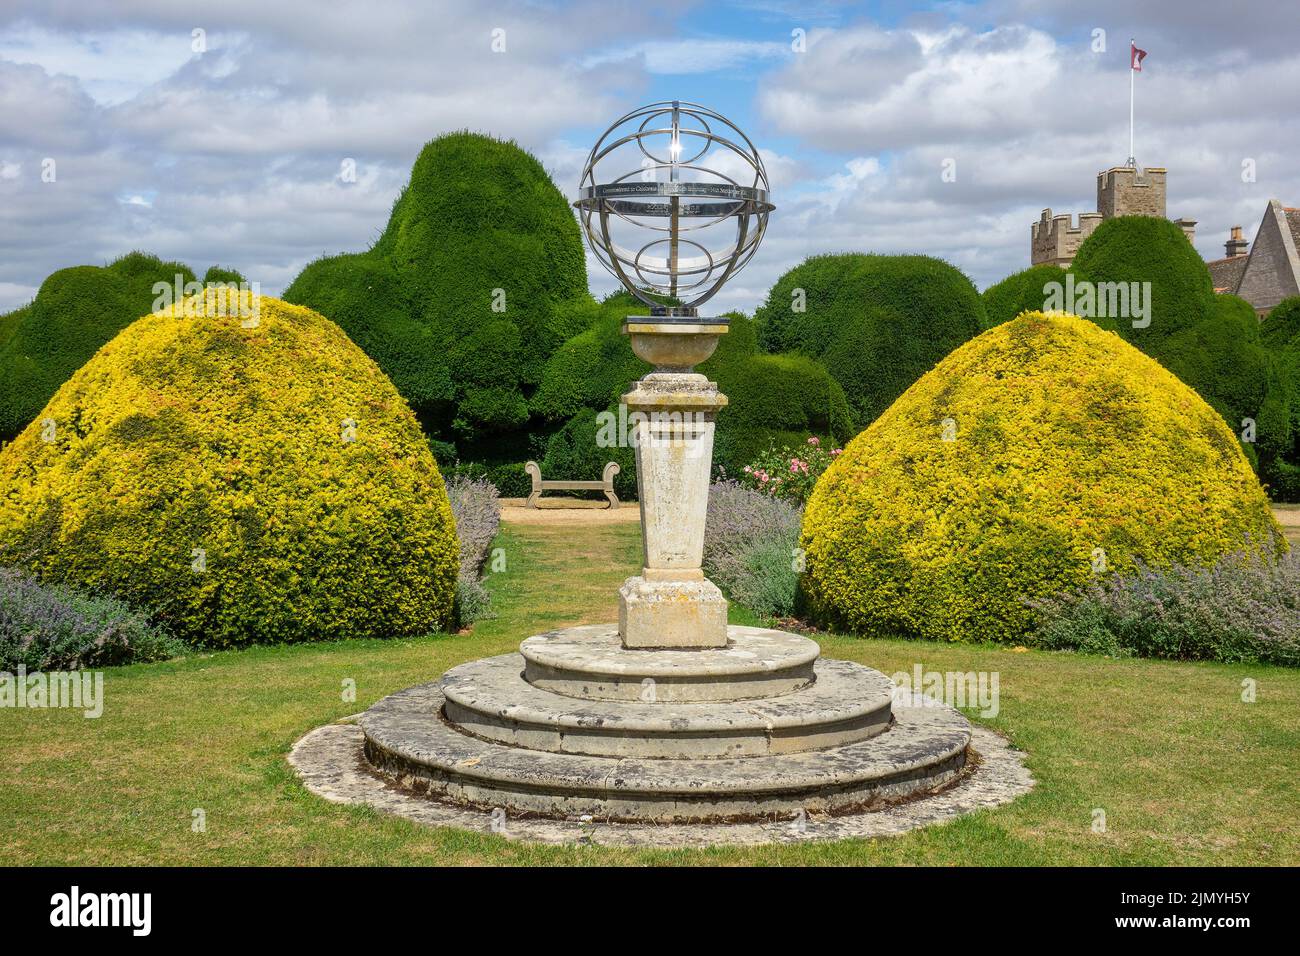 England, Northamptonshire, Rockingham castle gardens & Armillary sphere Stock Photo